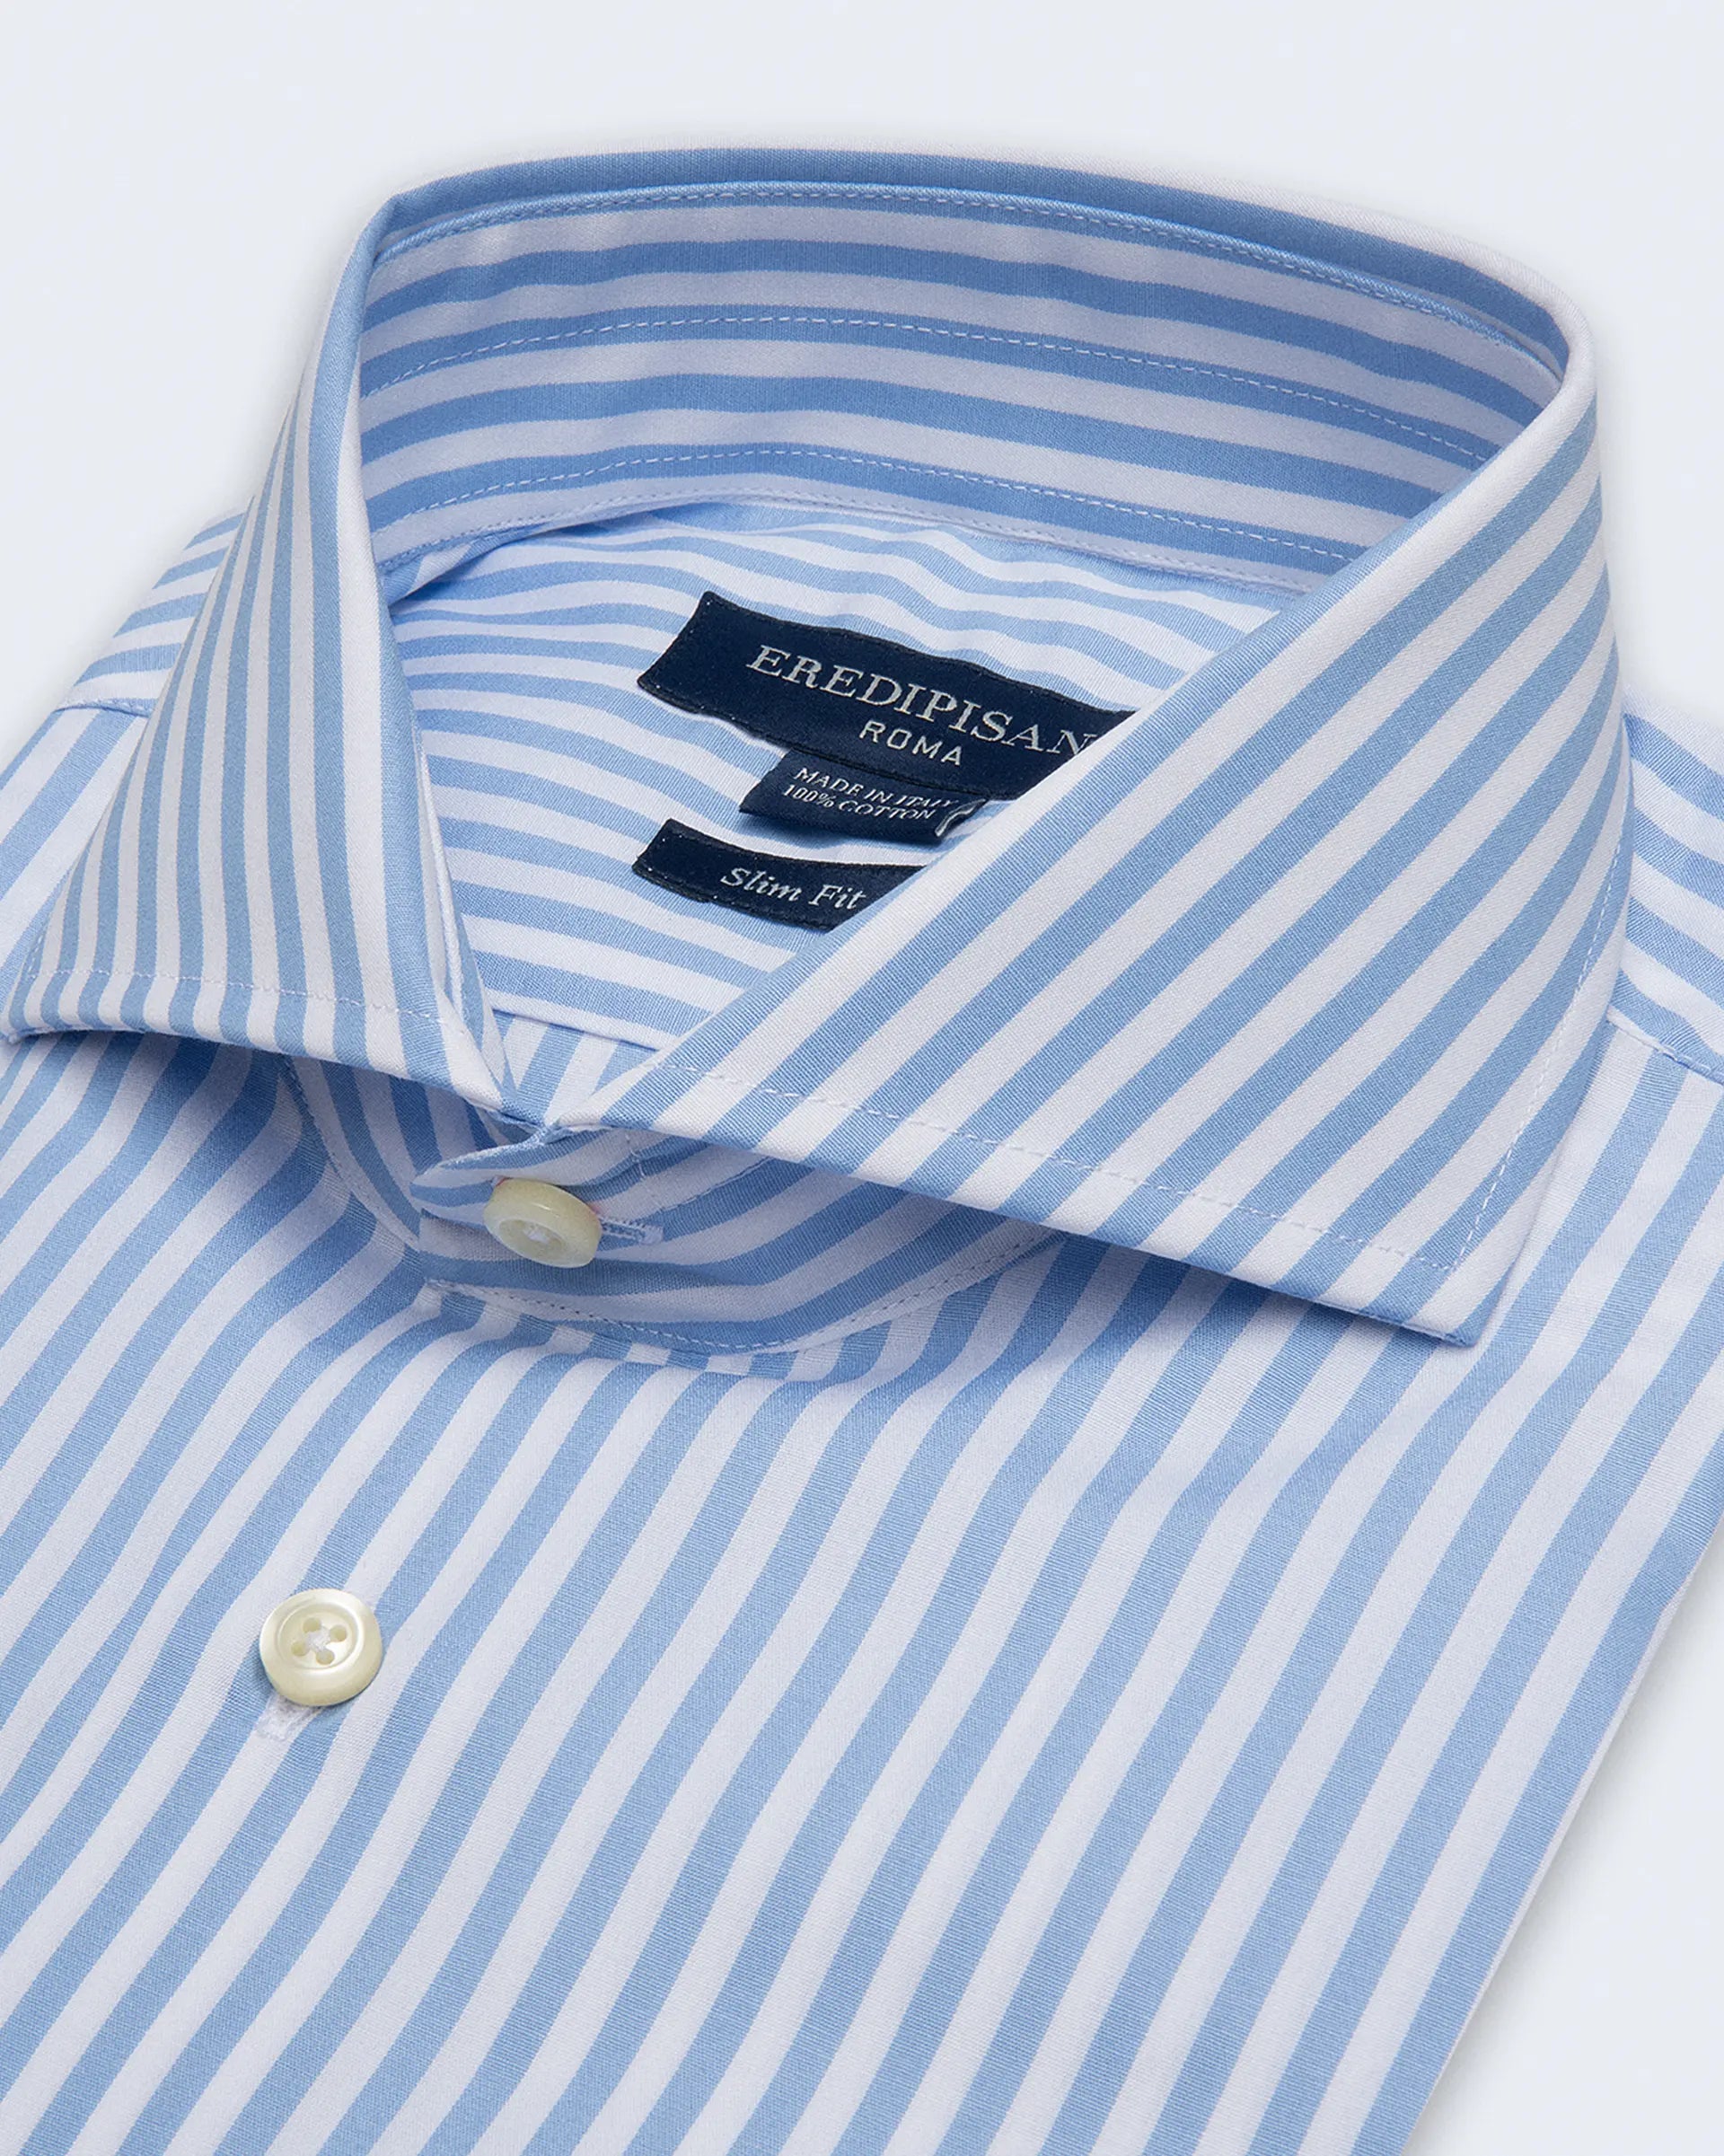 Light blue striped shirt in pure cotton, slim fit, Venice collar